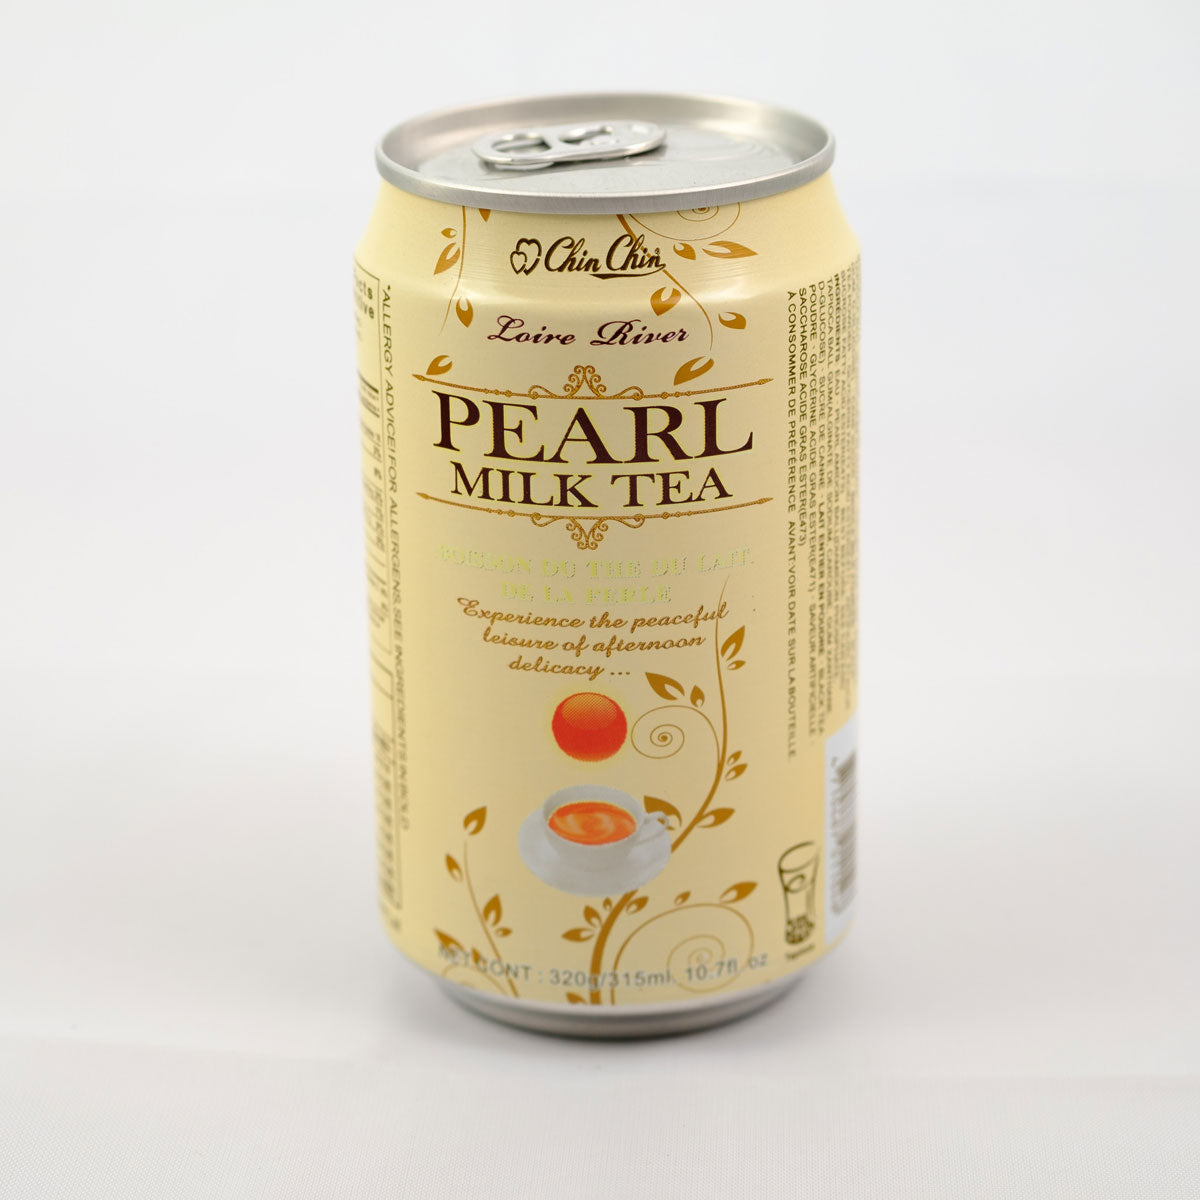 Pearl Milk Tea Drink